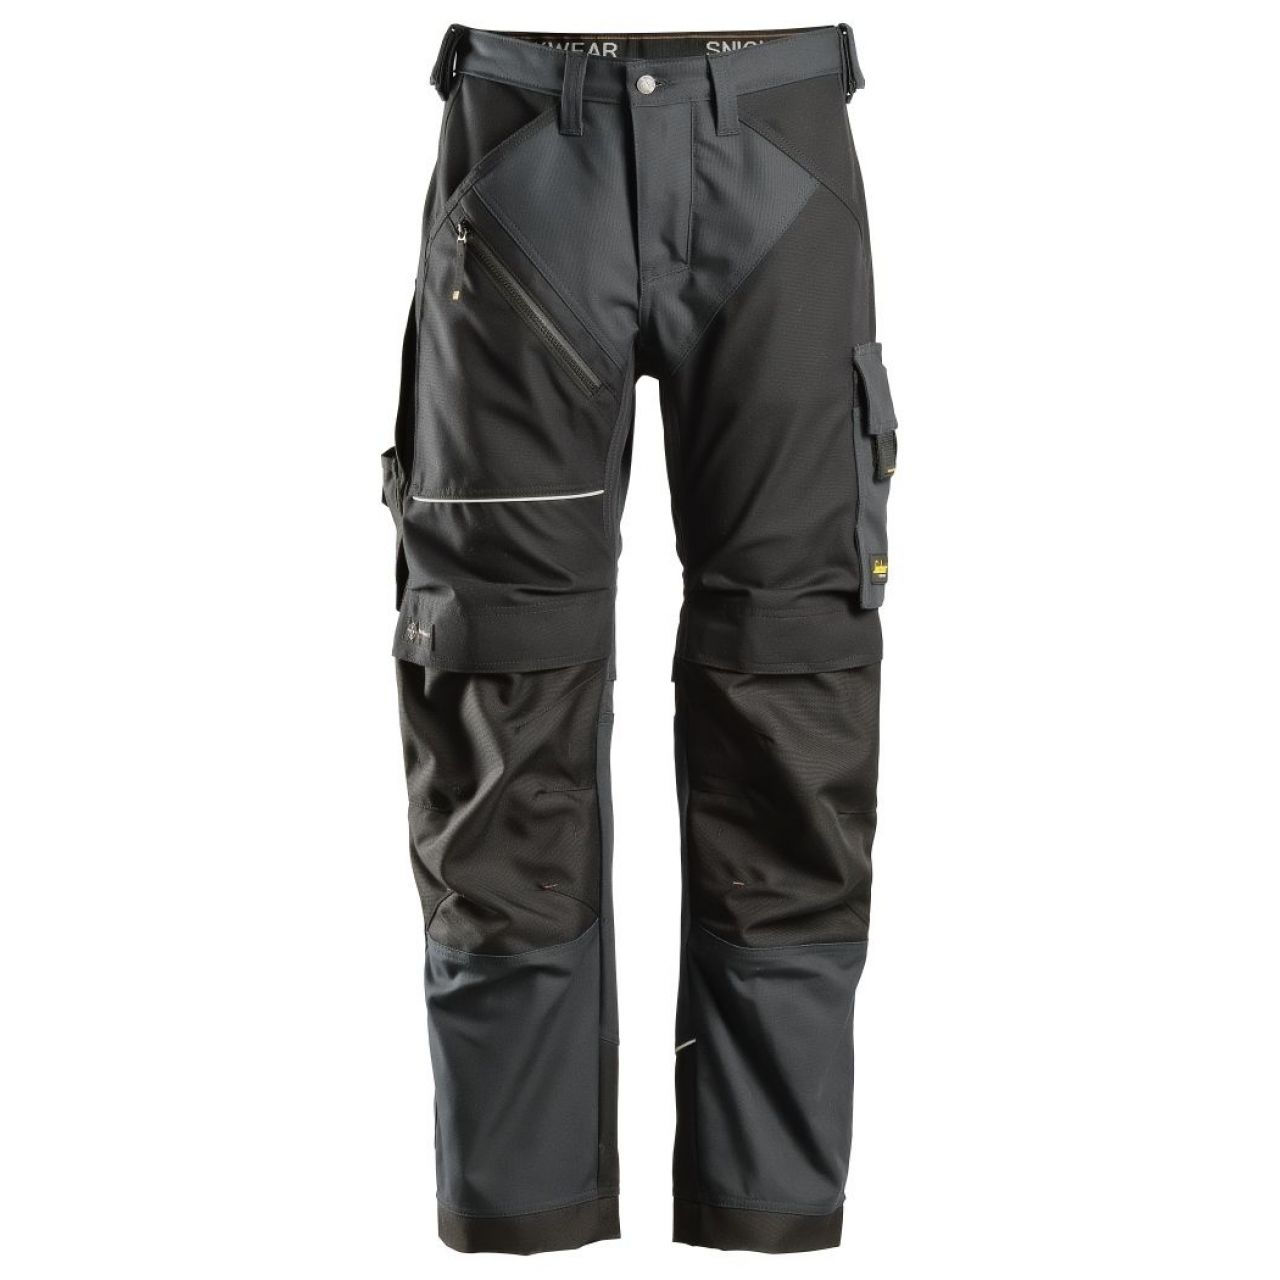 Pantalon Canvas+ RuffWork gris acero-negro talla 160